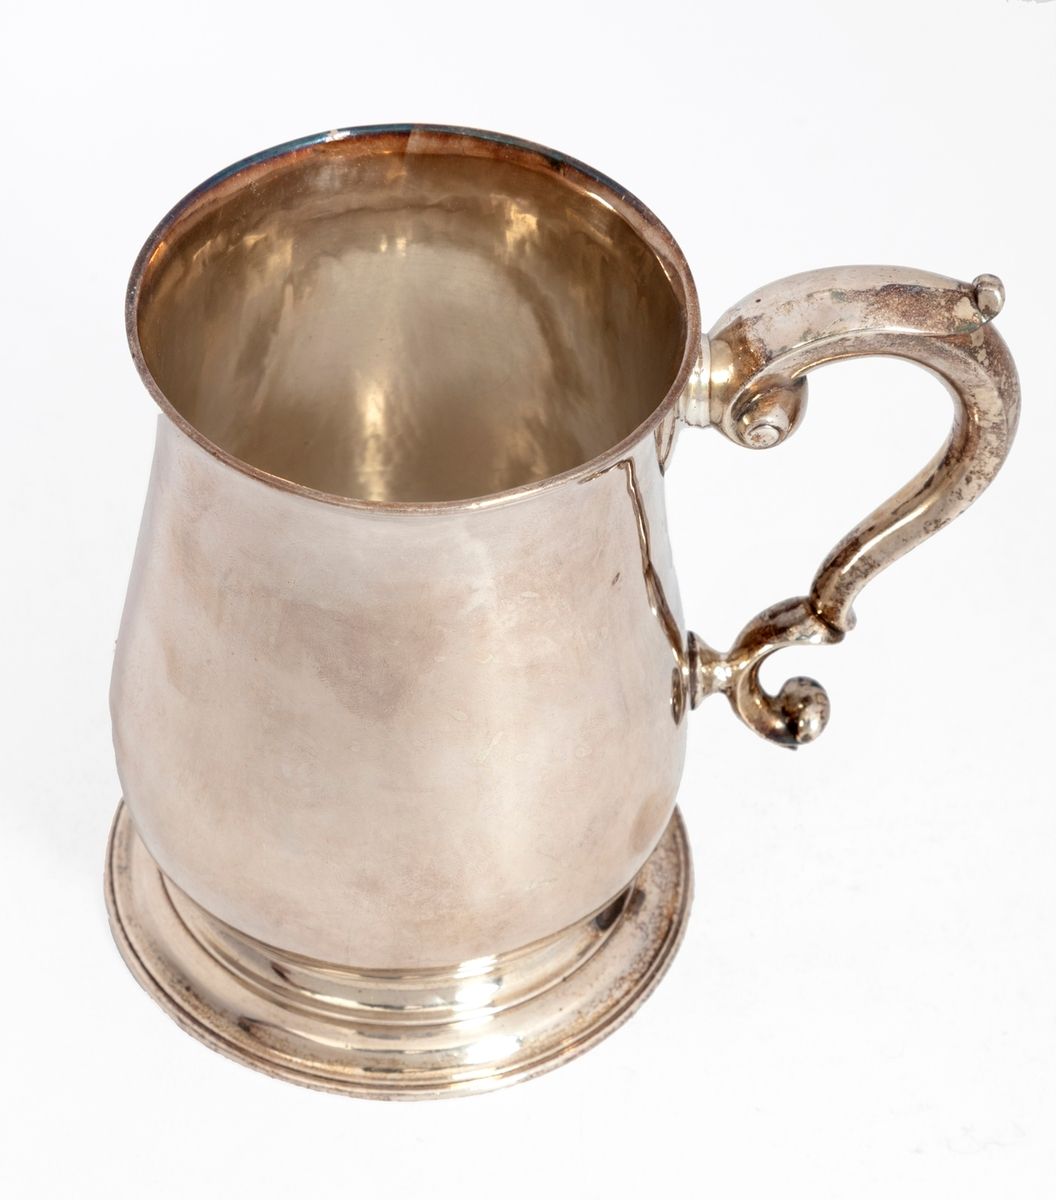 Null 带柄银杯。18世纪的英国作品，字母日期为 "U"。
银器大师Fuller White。
高度：12.5厘米
重量：380克